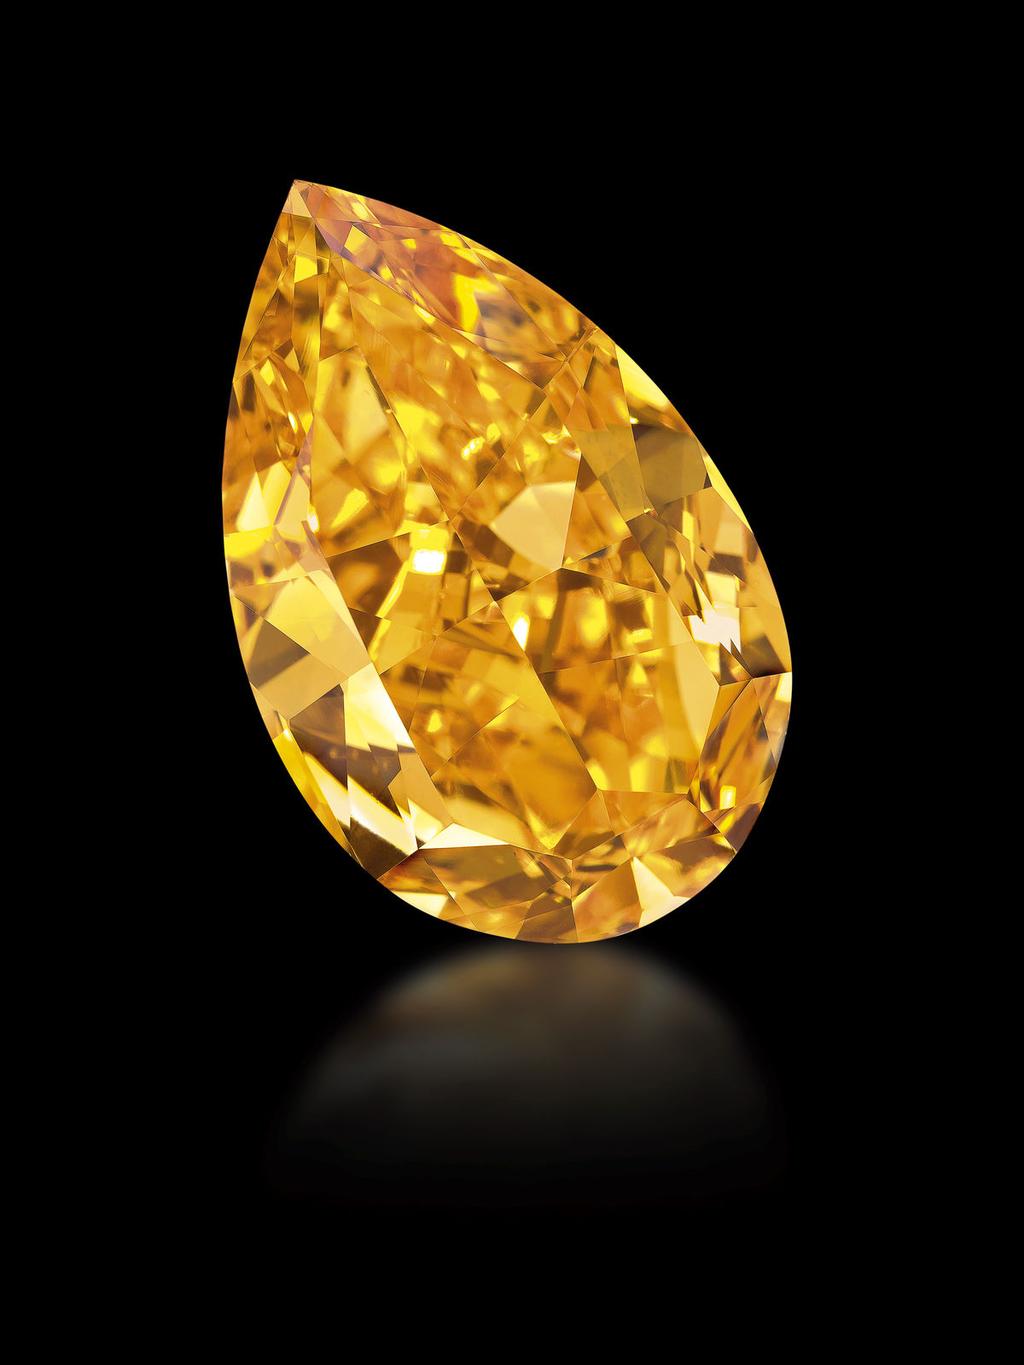 Orange Diamond Sells for $36 Million at Christie s Thomas Mulier November 13, 2013 3:28 AM EST "The Orange," the largest fancy vivid orange diamond in the world.